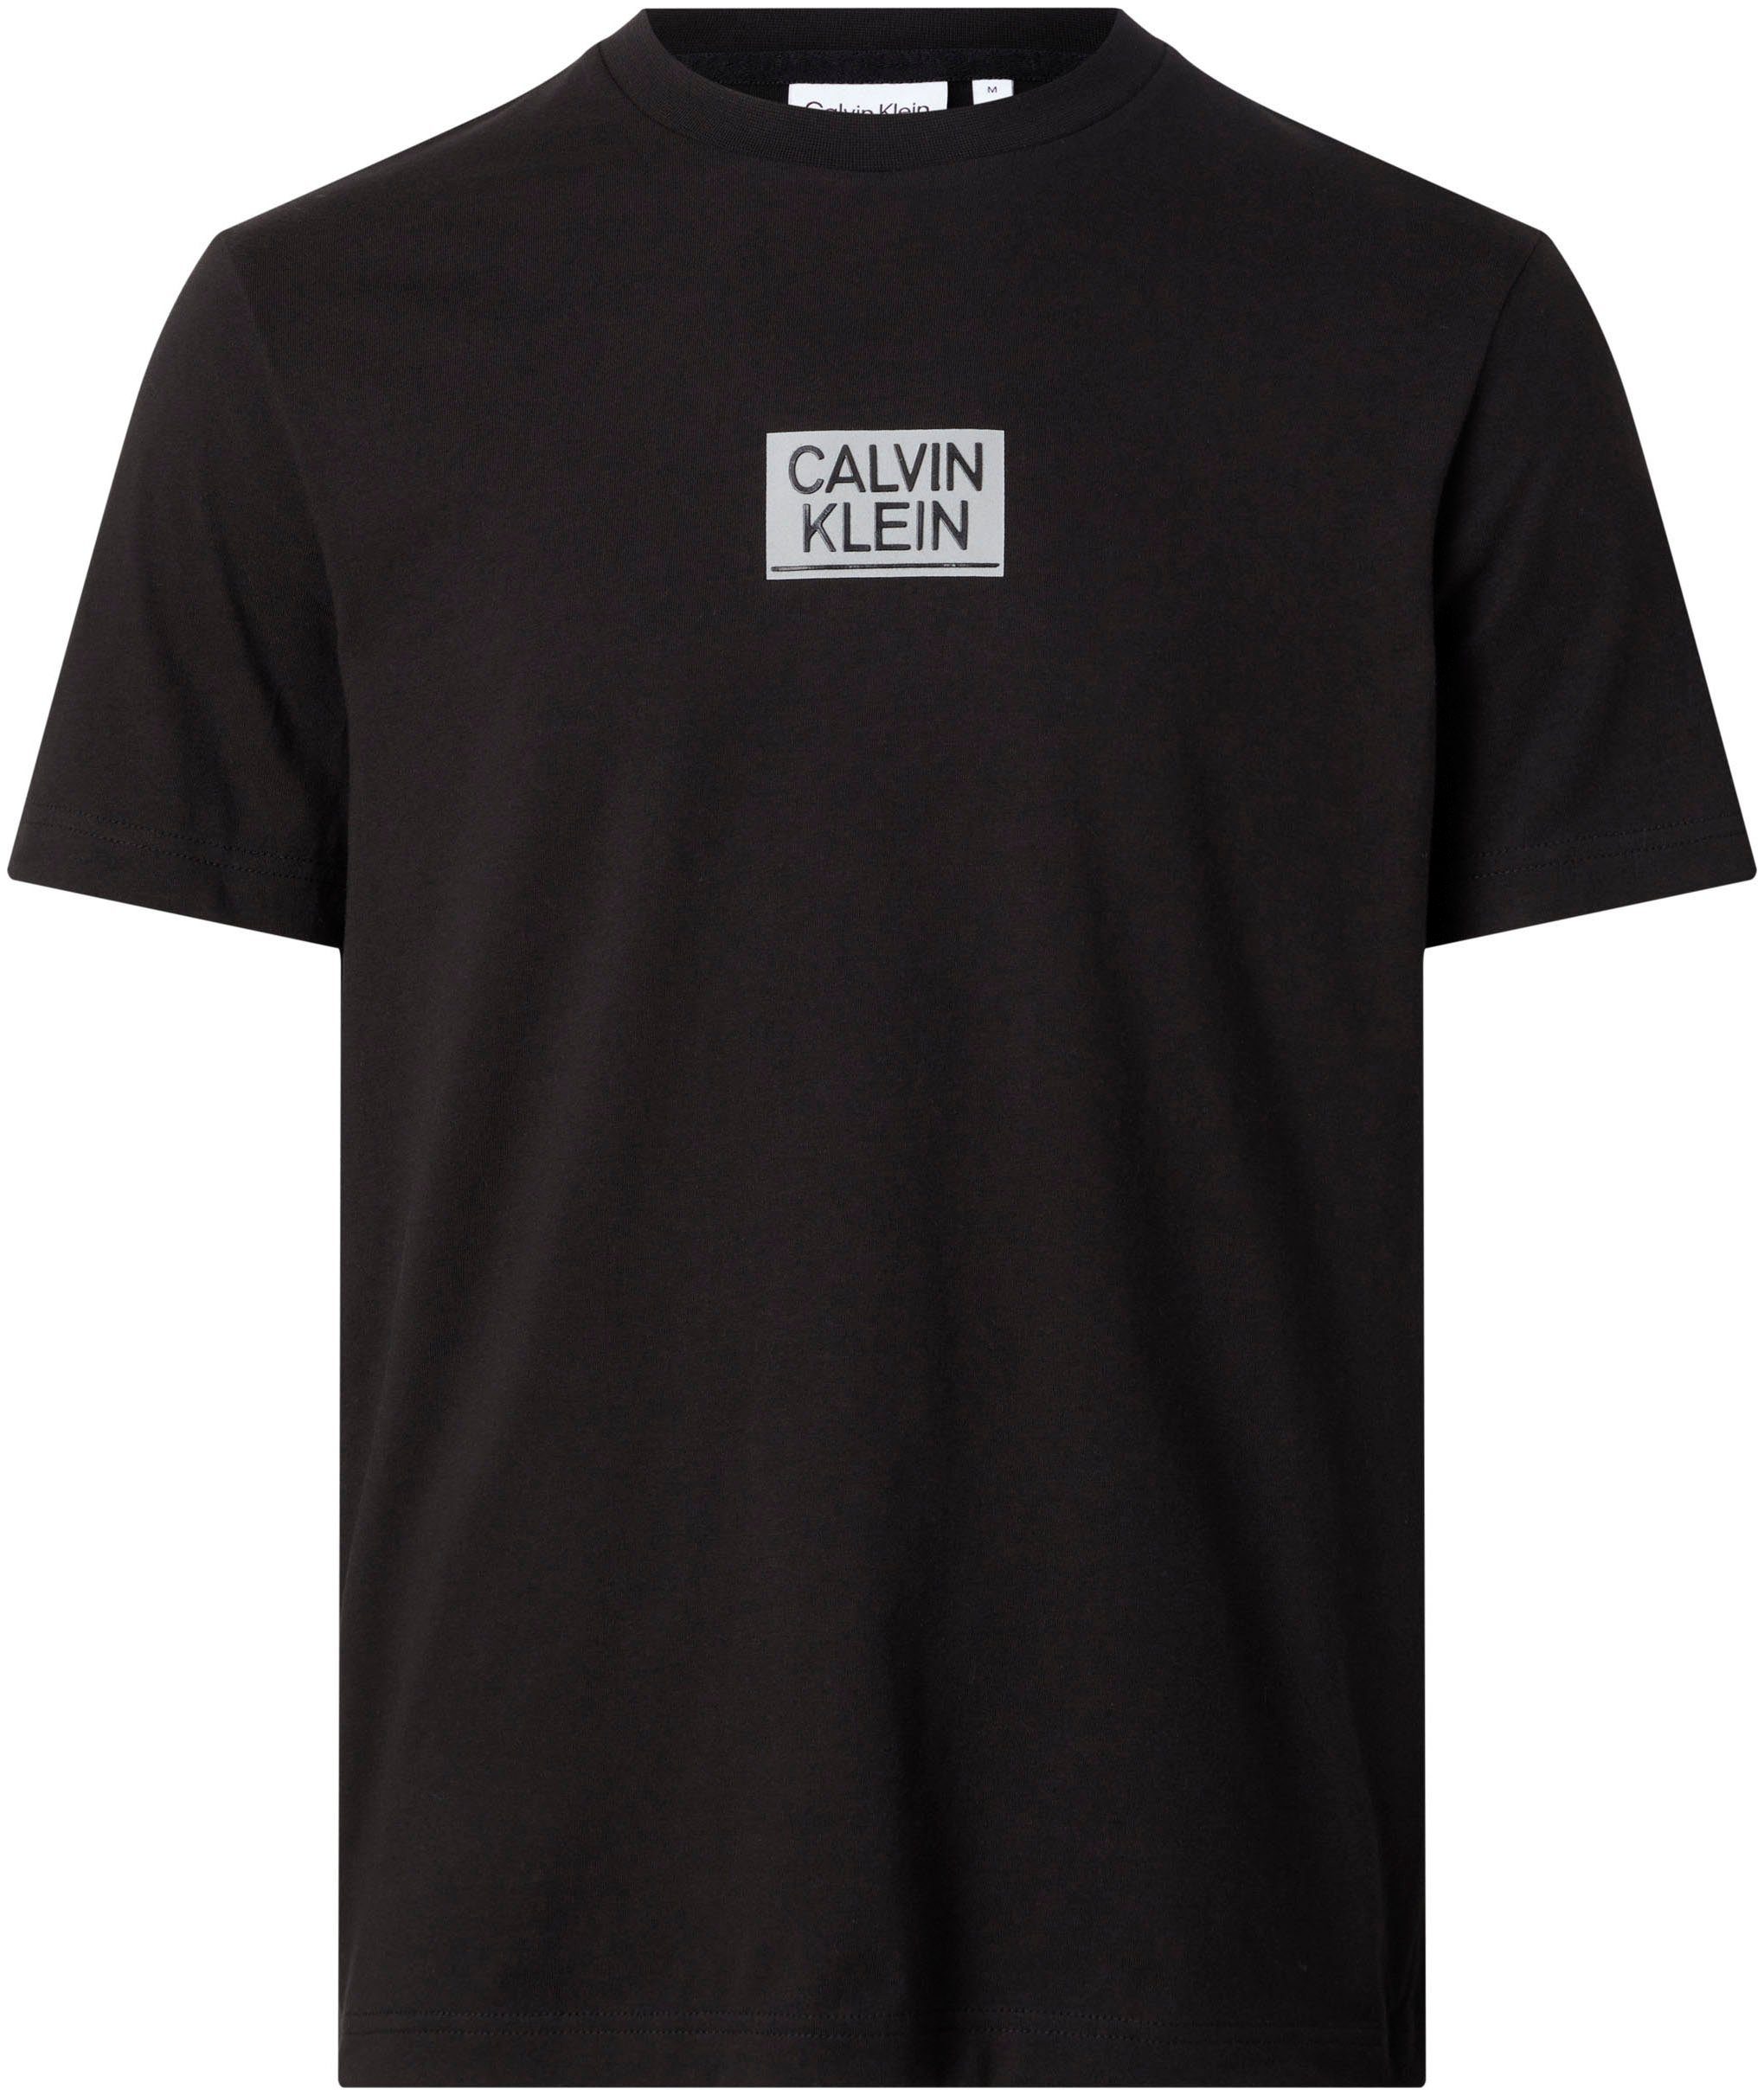 Calvin Klein T-Shirt T-SHIRT STENCIL LOGO Black GLOSS Ck